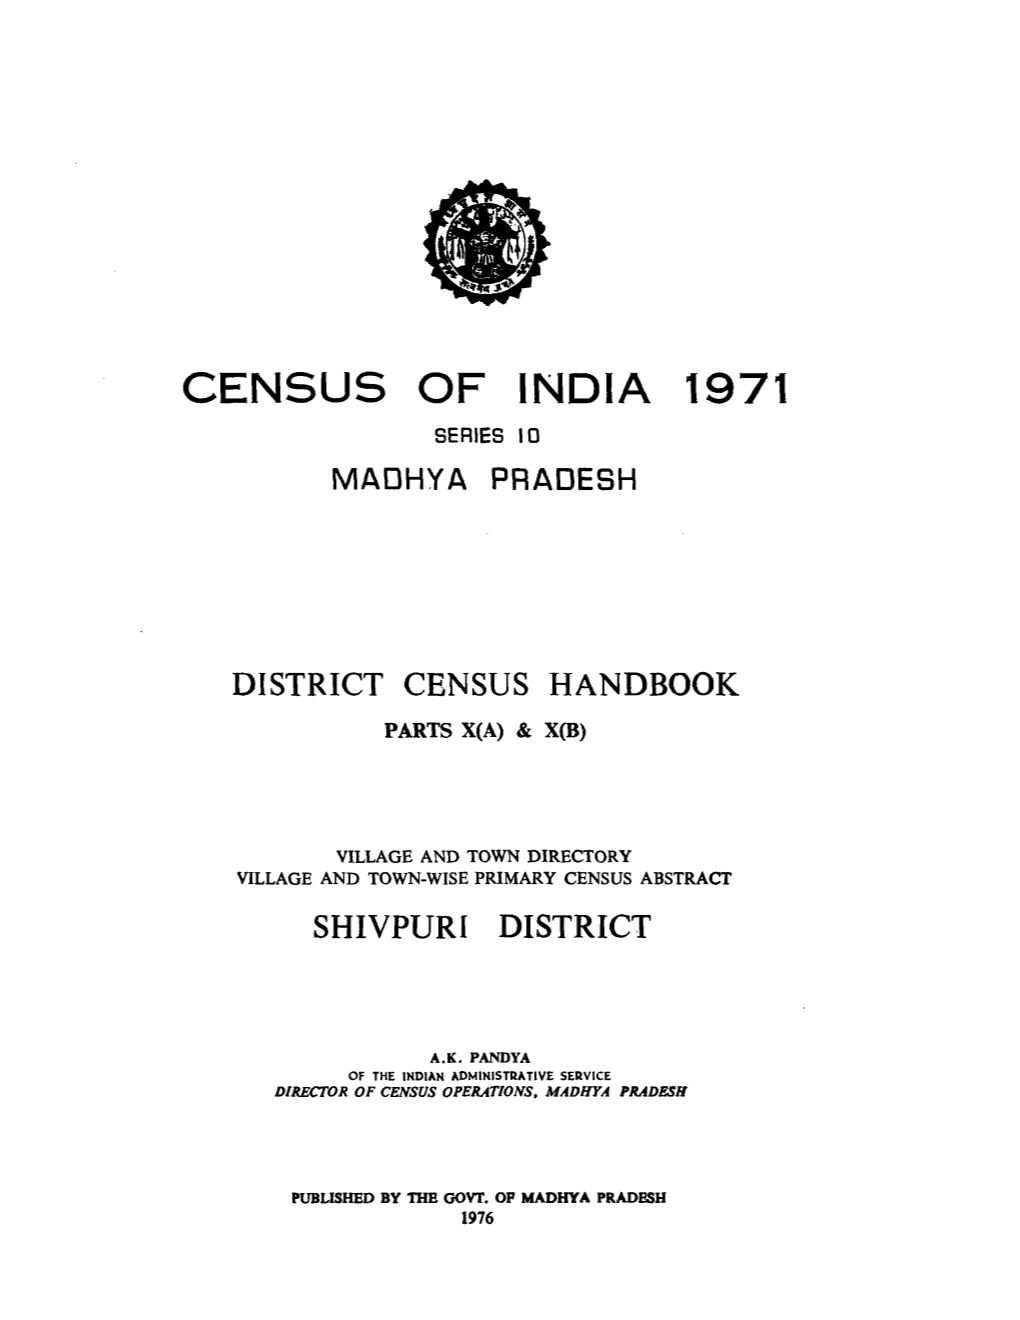 District Census Handbook, Shivpuri, Parts X